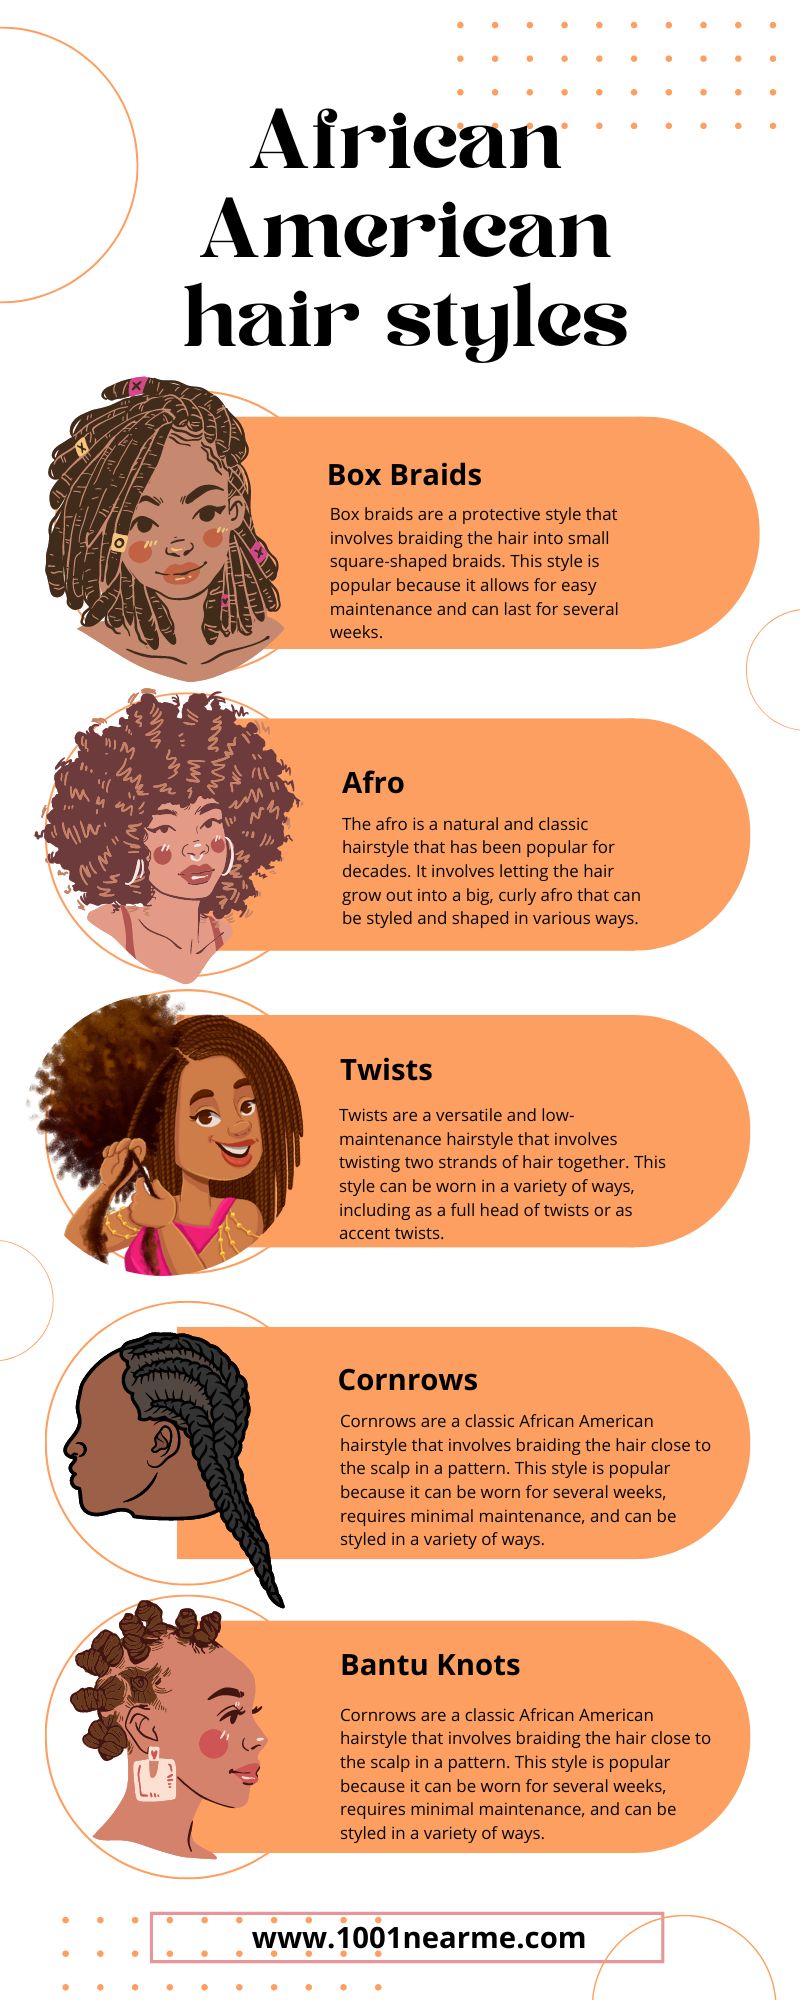 African American hair styles